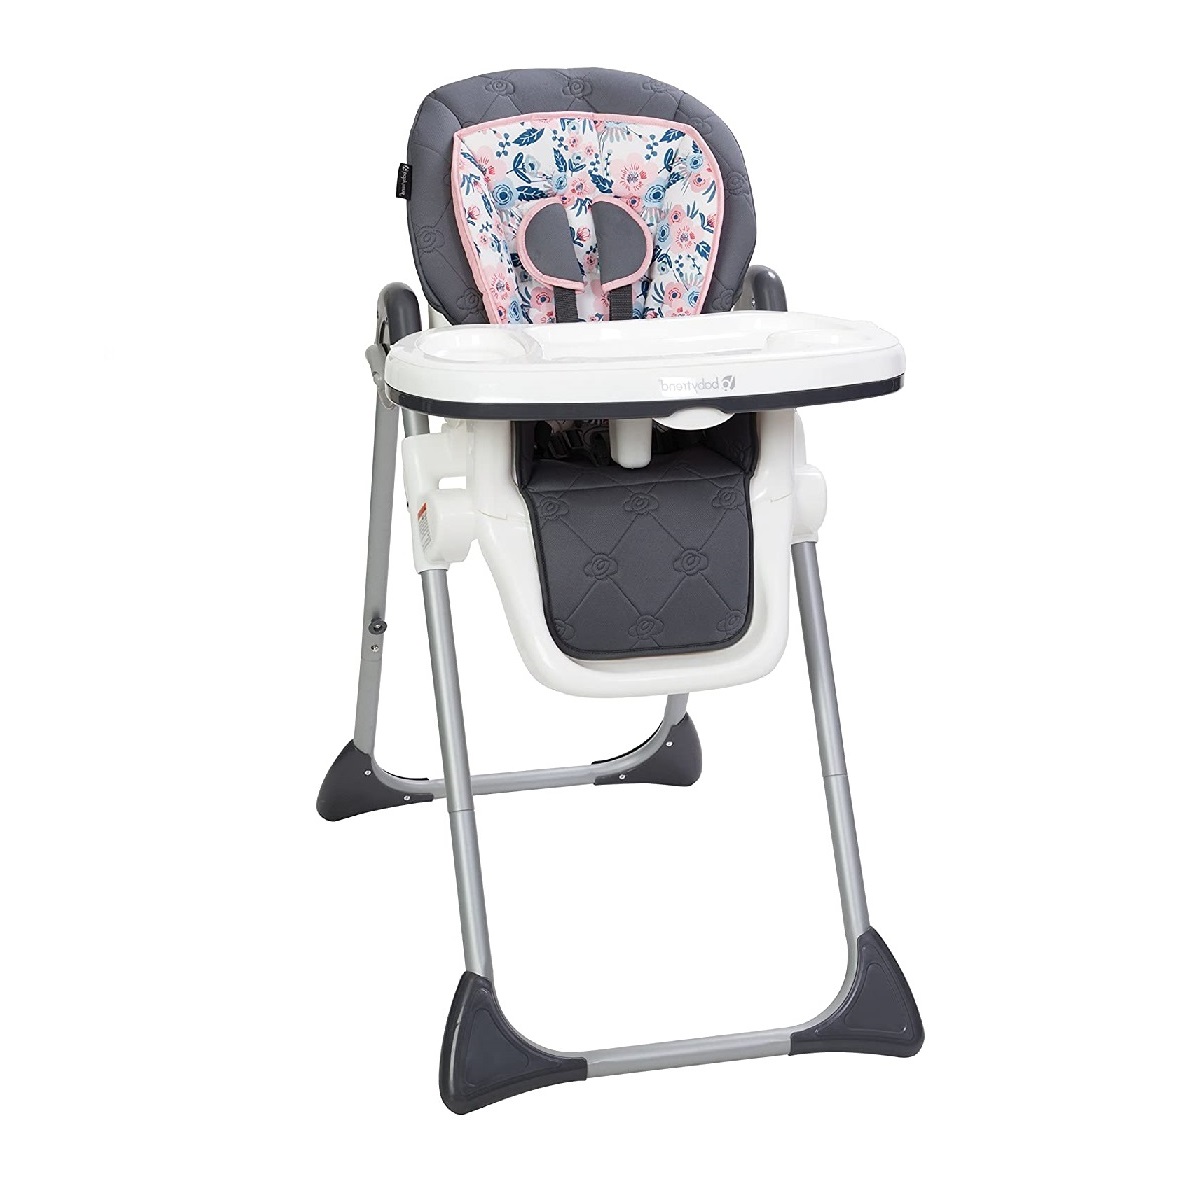 babytrend-tot-spot-3-in-1-high-chair-bluebell